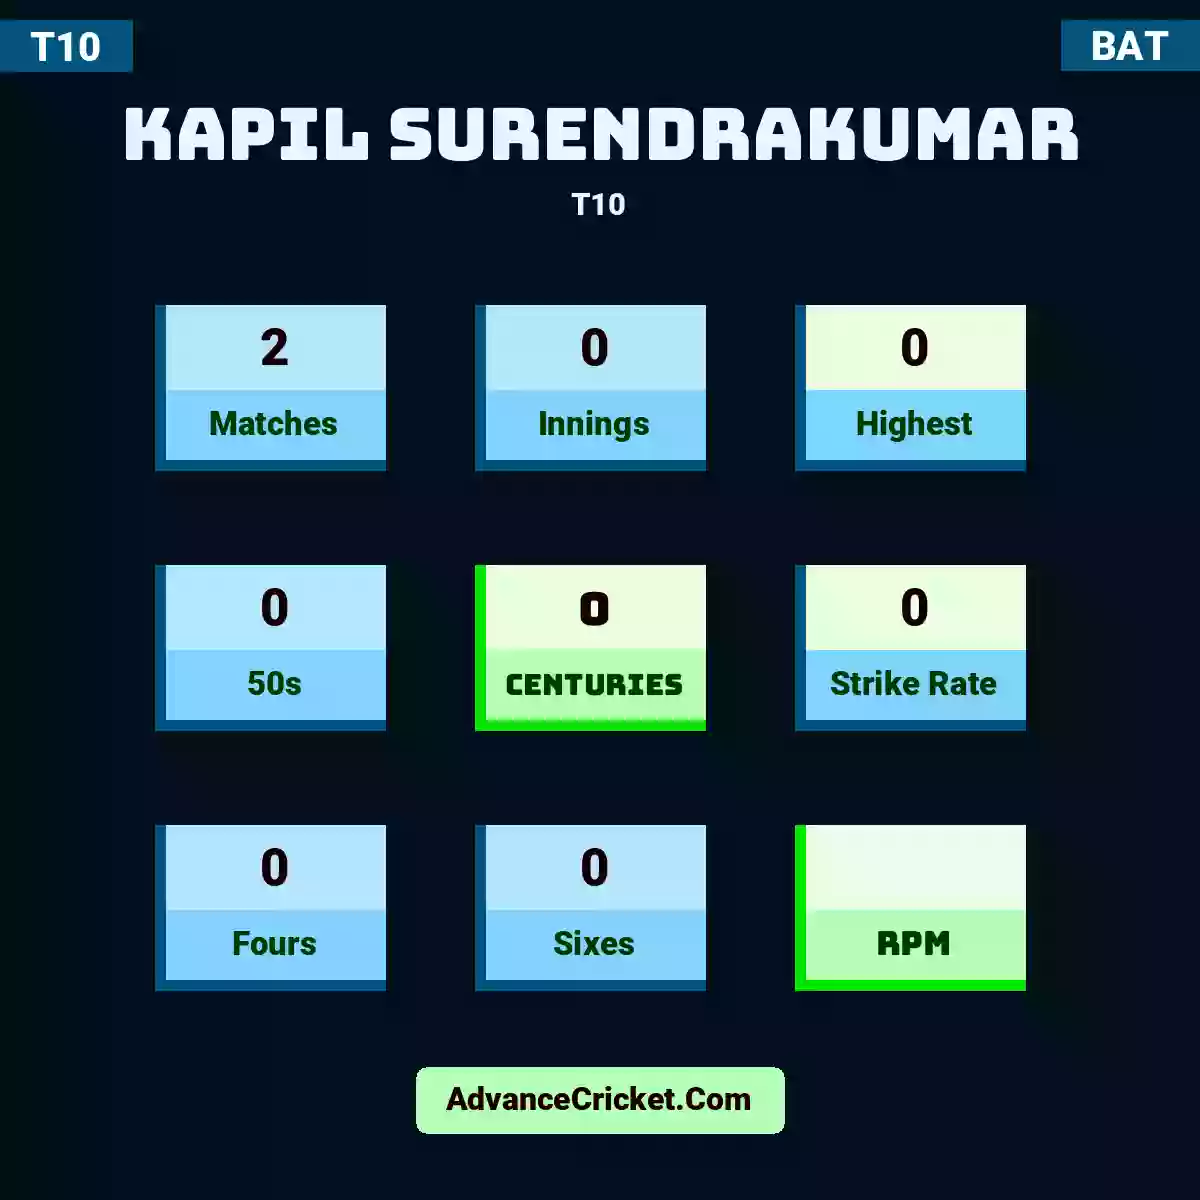 Kapil Surendrakumar T10 , Kapil Surendrakumar played 2 matches, scored 0 runs as highest, 0 half-centuries, and 0 centuries, with a strike rate of 0. K.Surendrakumar hit 0 fours and 0 sixes.